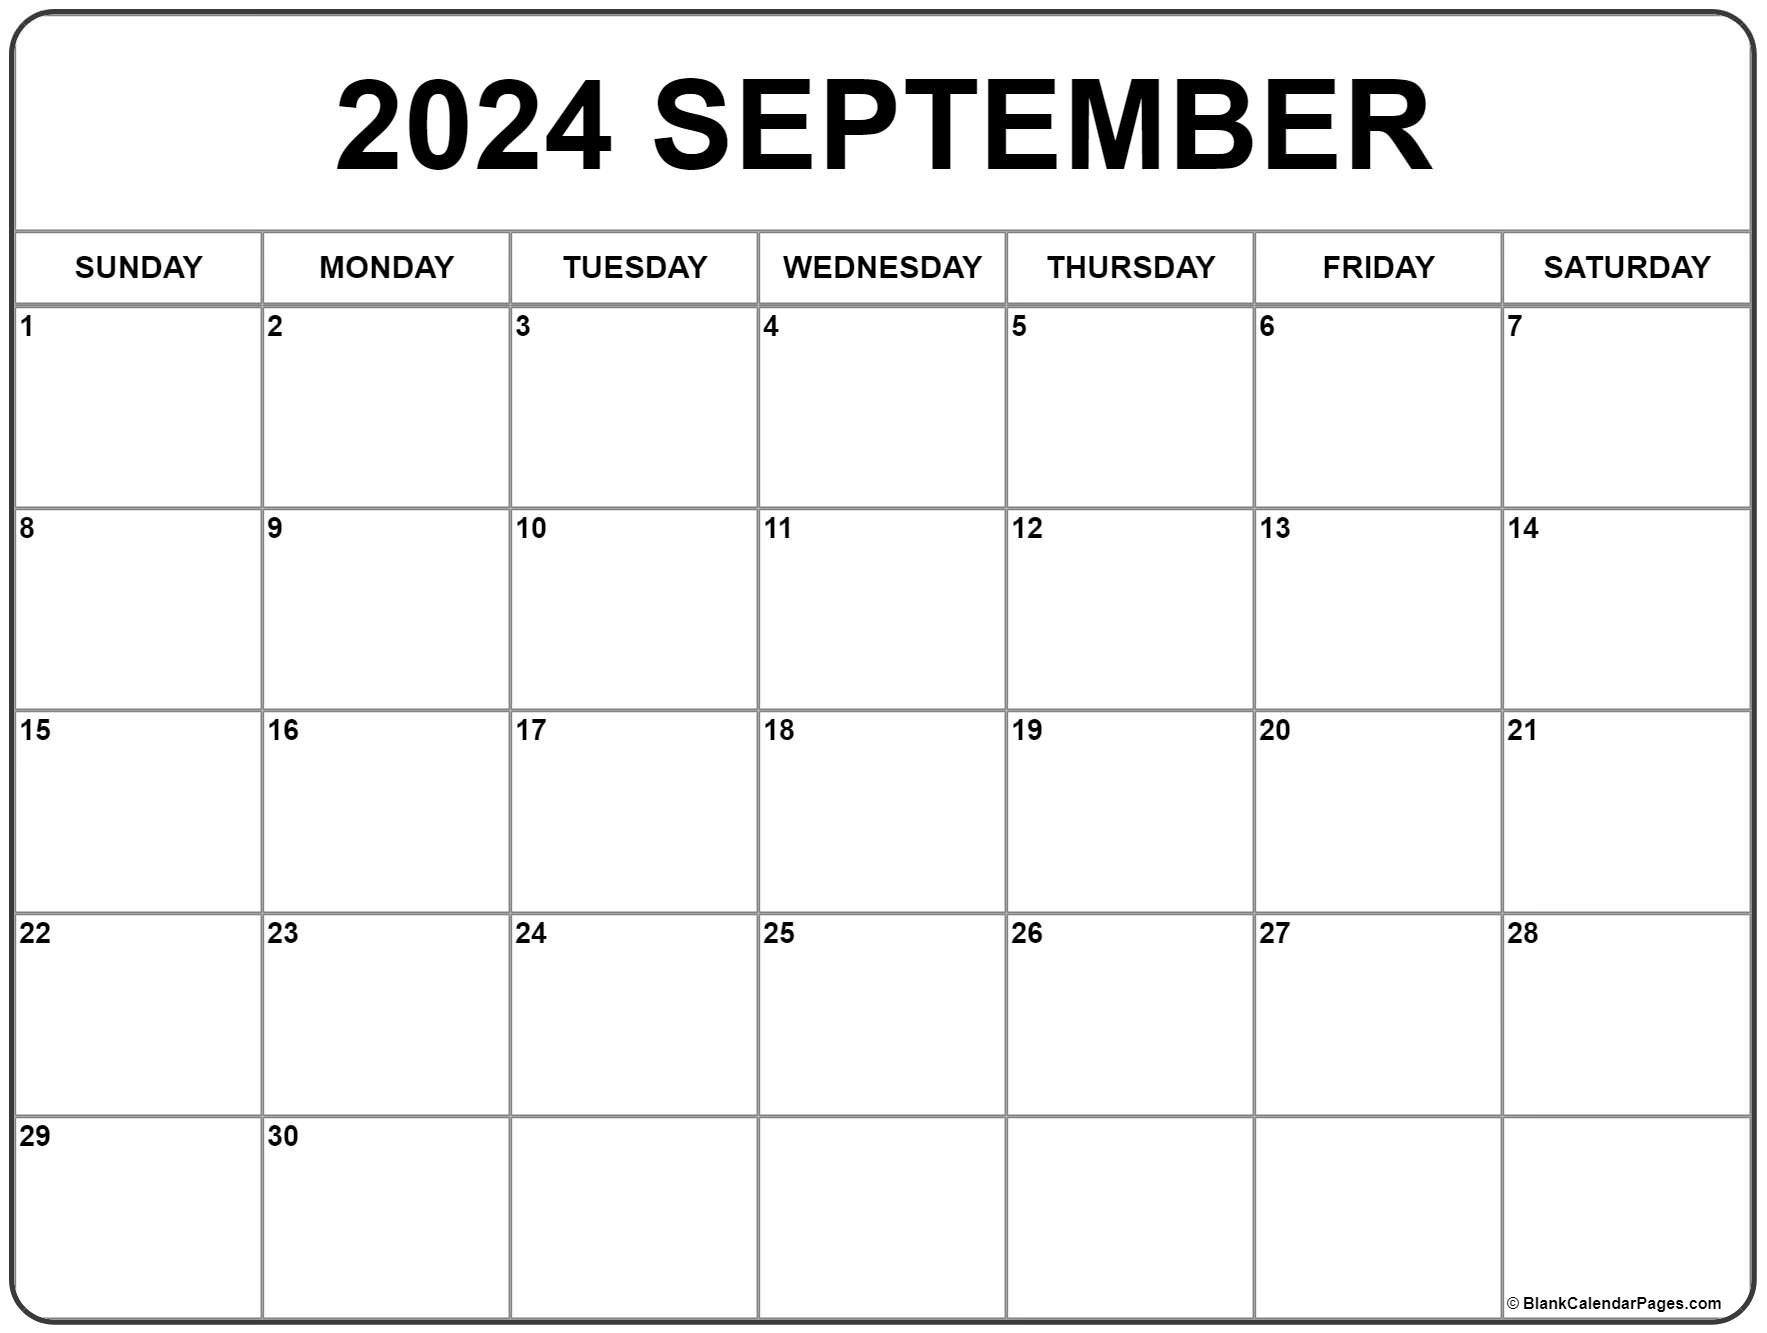 September 2024 Calendar | Free Printable Calendar within Free Printable August September 2024 Calendar